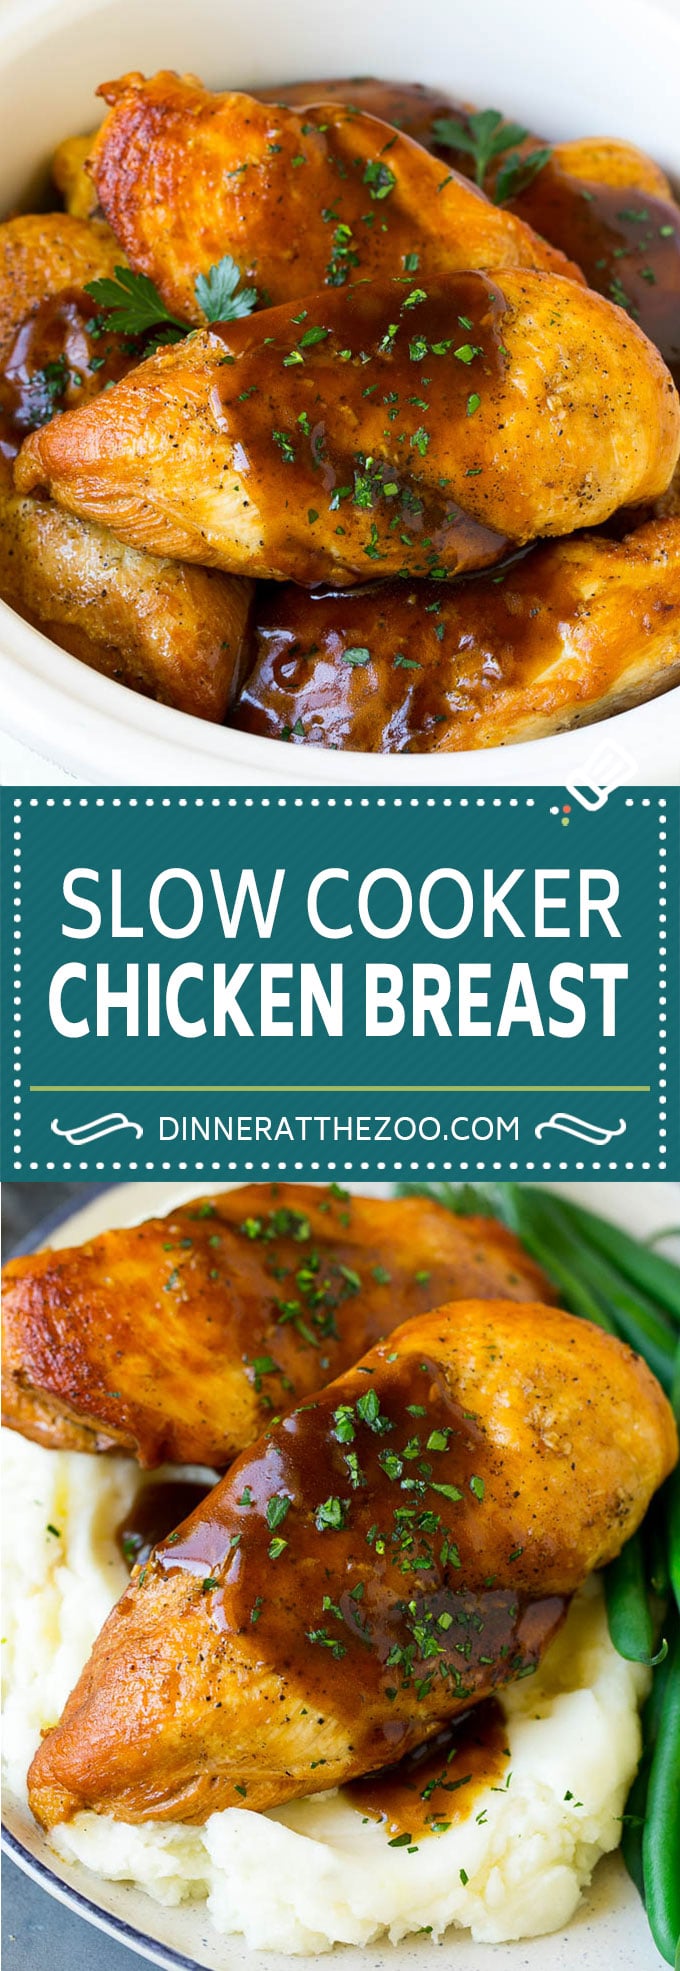 Slow Cooker Chicken Breast Recipe | Crock Pot Chicken Breast | Chicken and Gravy #chicken #slowcooker #crockpot #gravy #dinner #dinneratthezoo